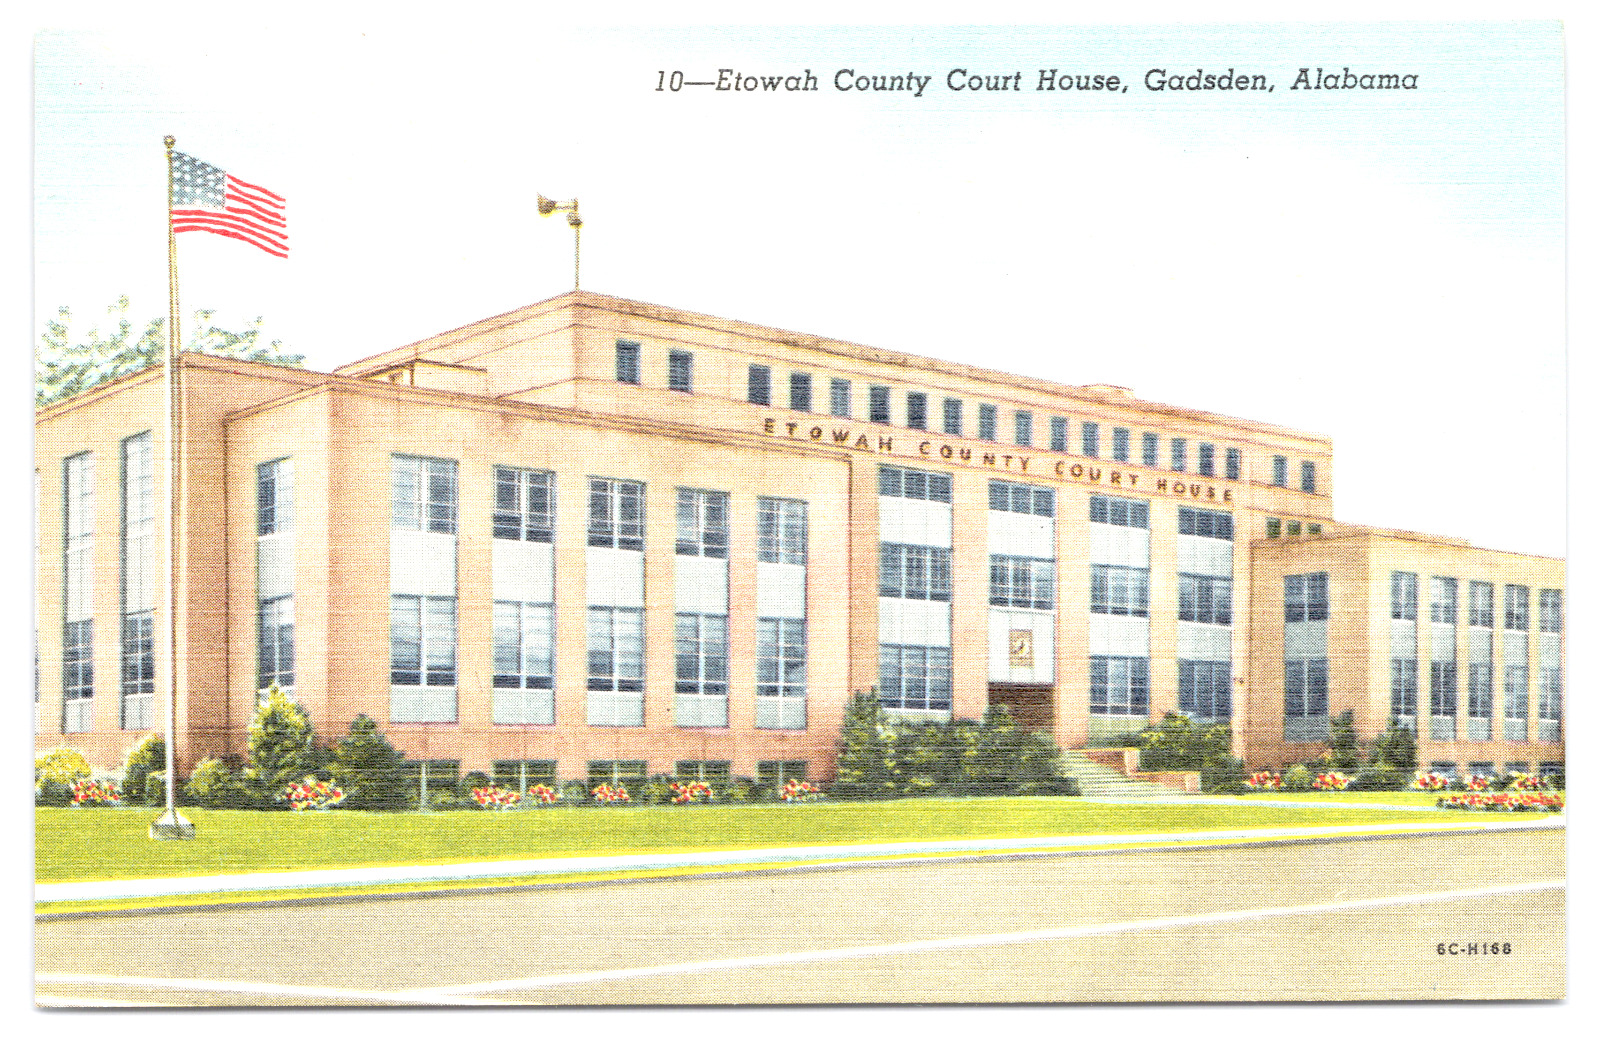 Postcard Etowah County Court House Gadsden Alabama #6c-H168